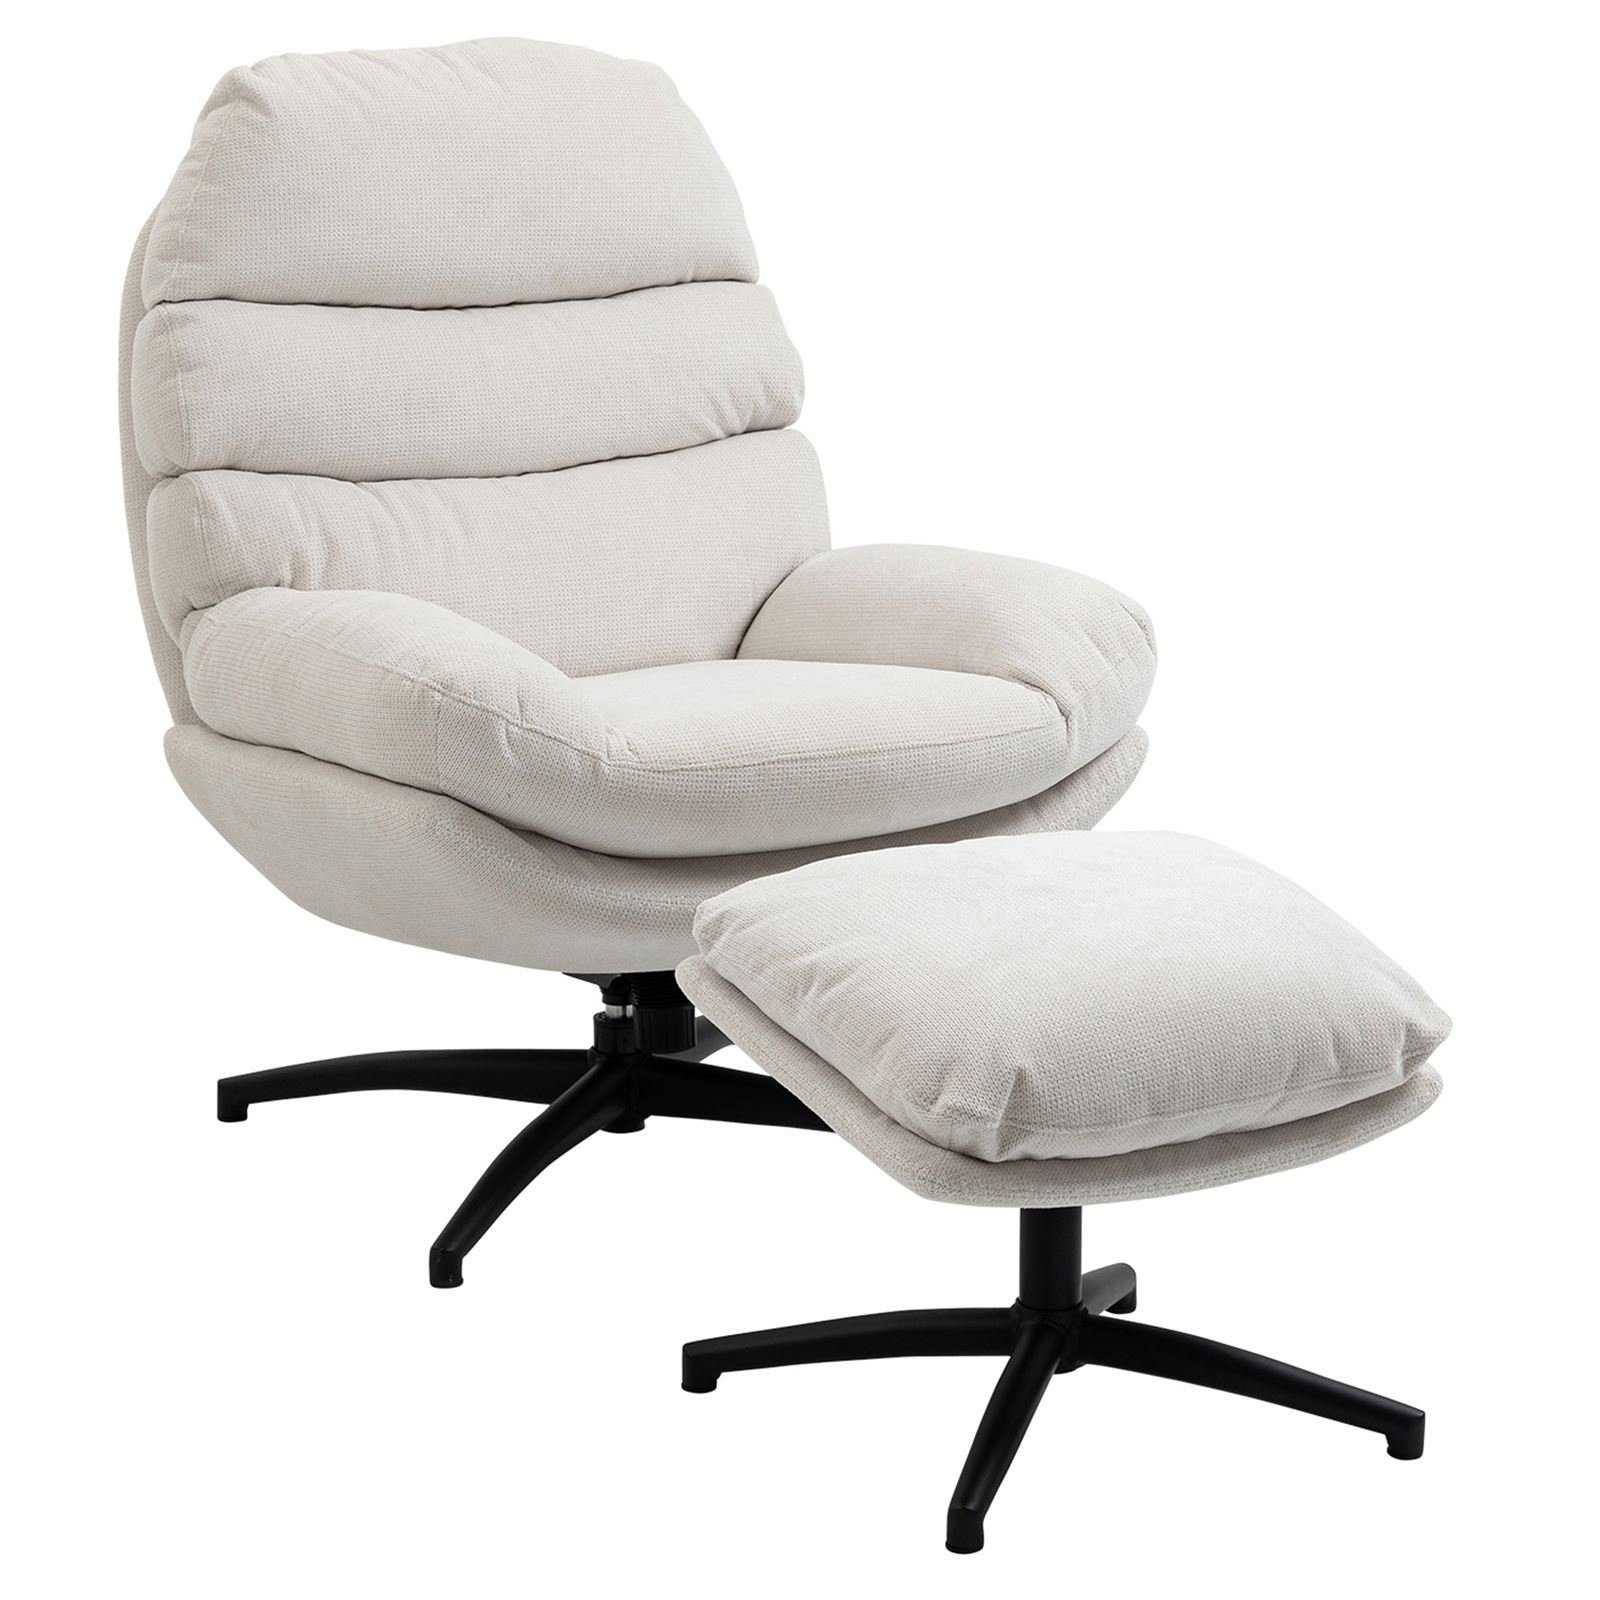 CARO-Möbel Relaxsessel, Relaxsessel mit Hocker Polstersessel Wohnzimmer Metall Stoff Modern beige | Sessel